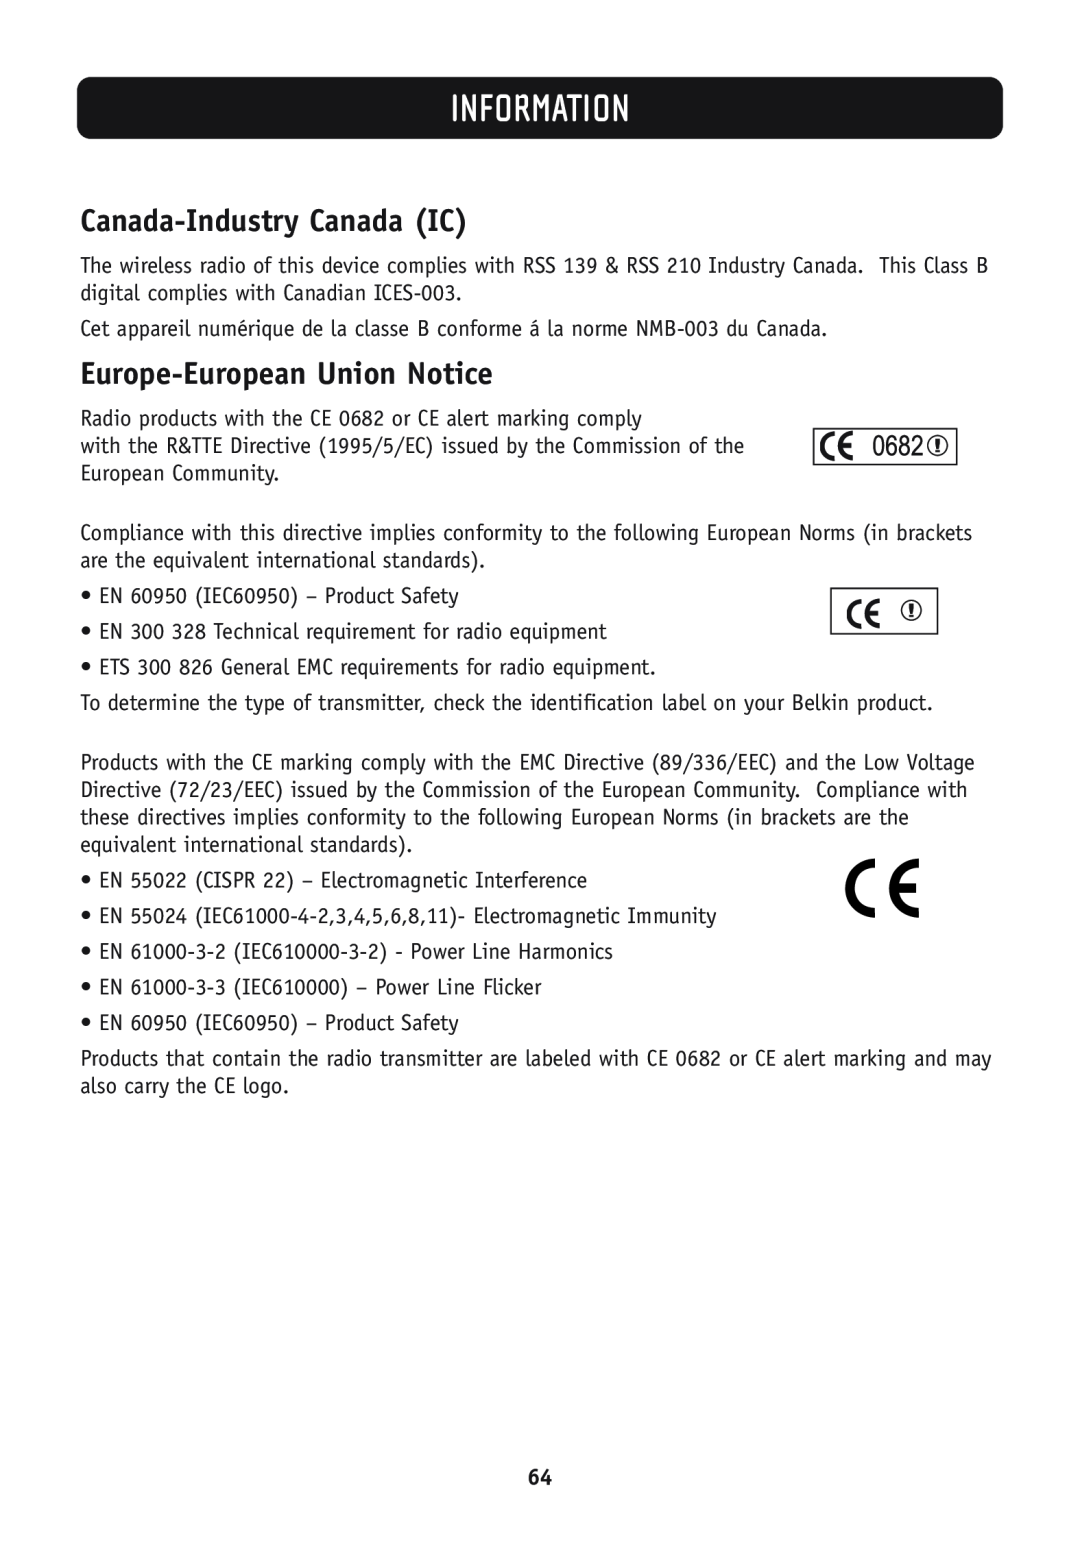 Belkin F5D7630-4A, F5D7630-4B user manual Canada-Industry Canada IC, Europe-European Union Notice, Information 